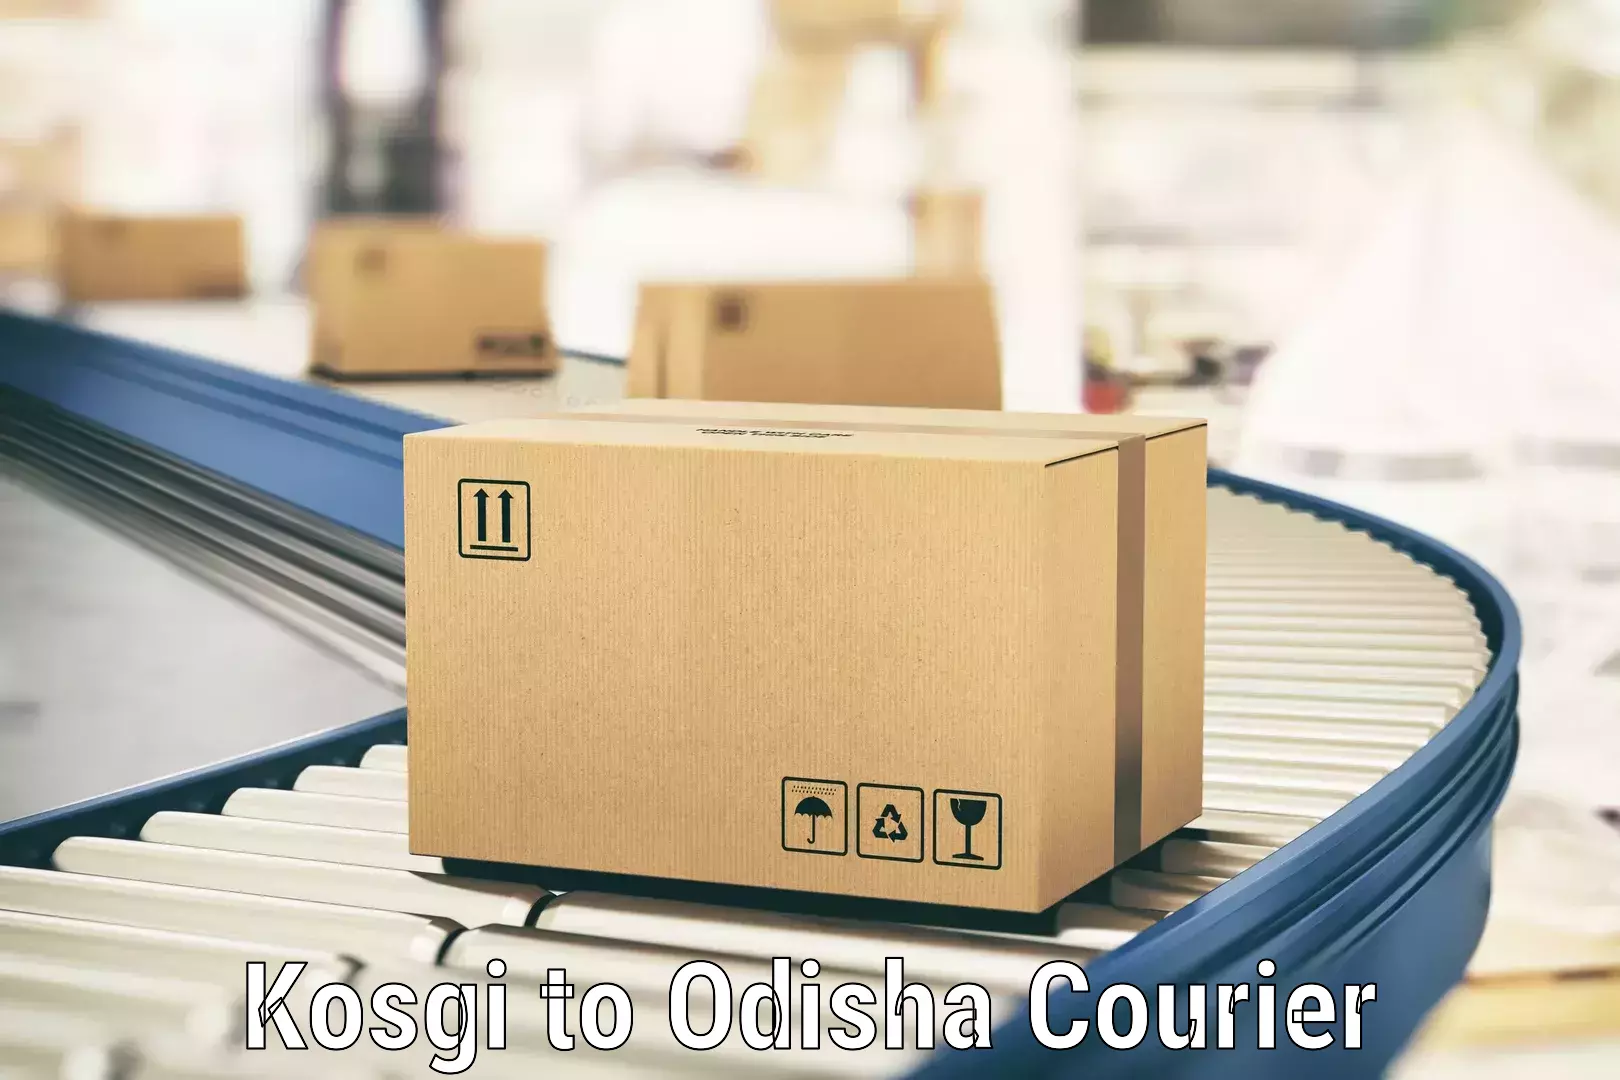 Reliable parcel services Kosgi to Raruan